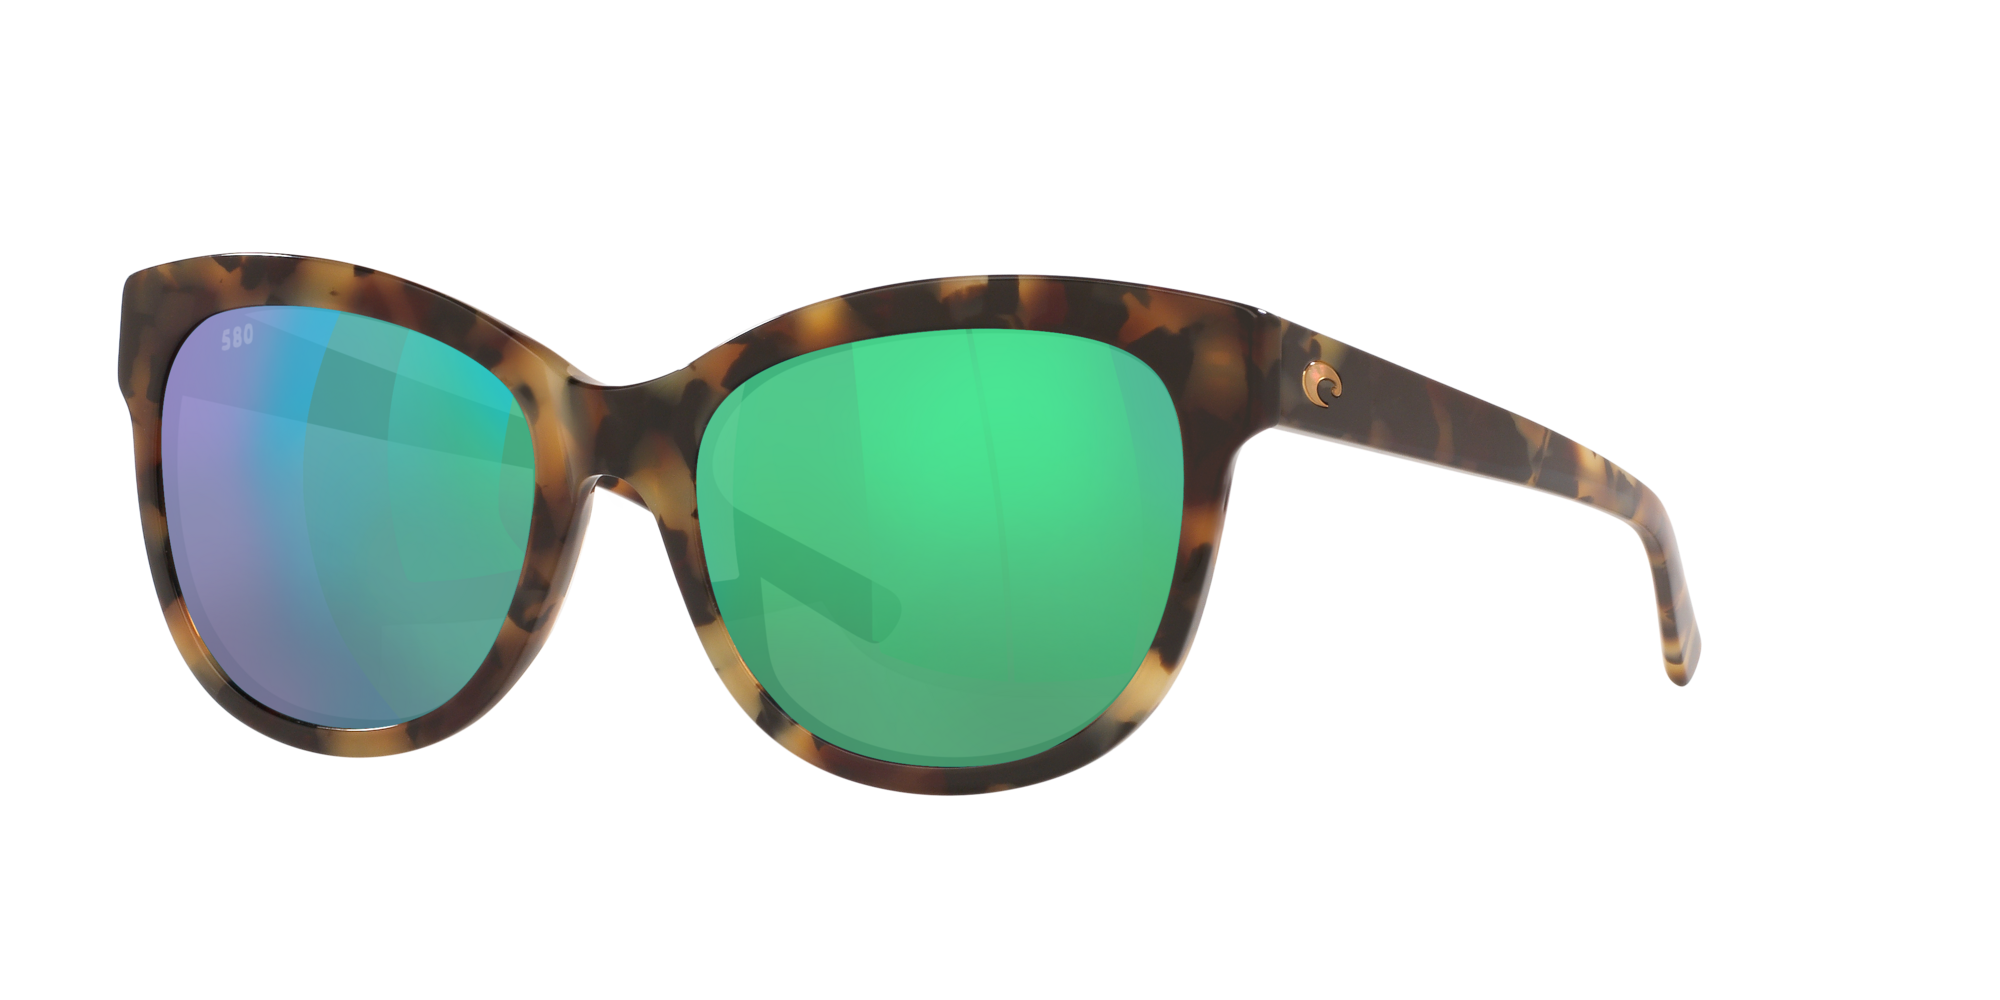 BIMINI Bay Polarized Sunglasses T-bb1-ag Amber Green Lens Fishing Beach Outdoors for sale online 